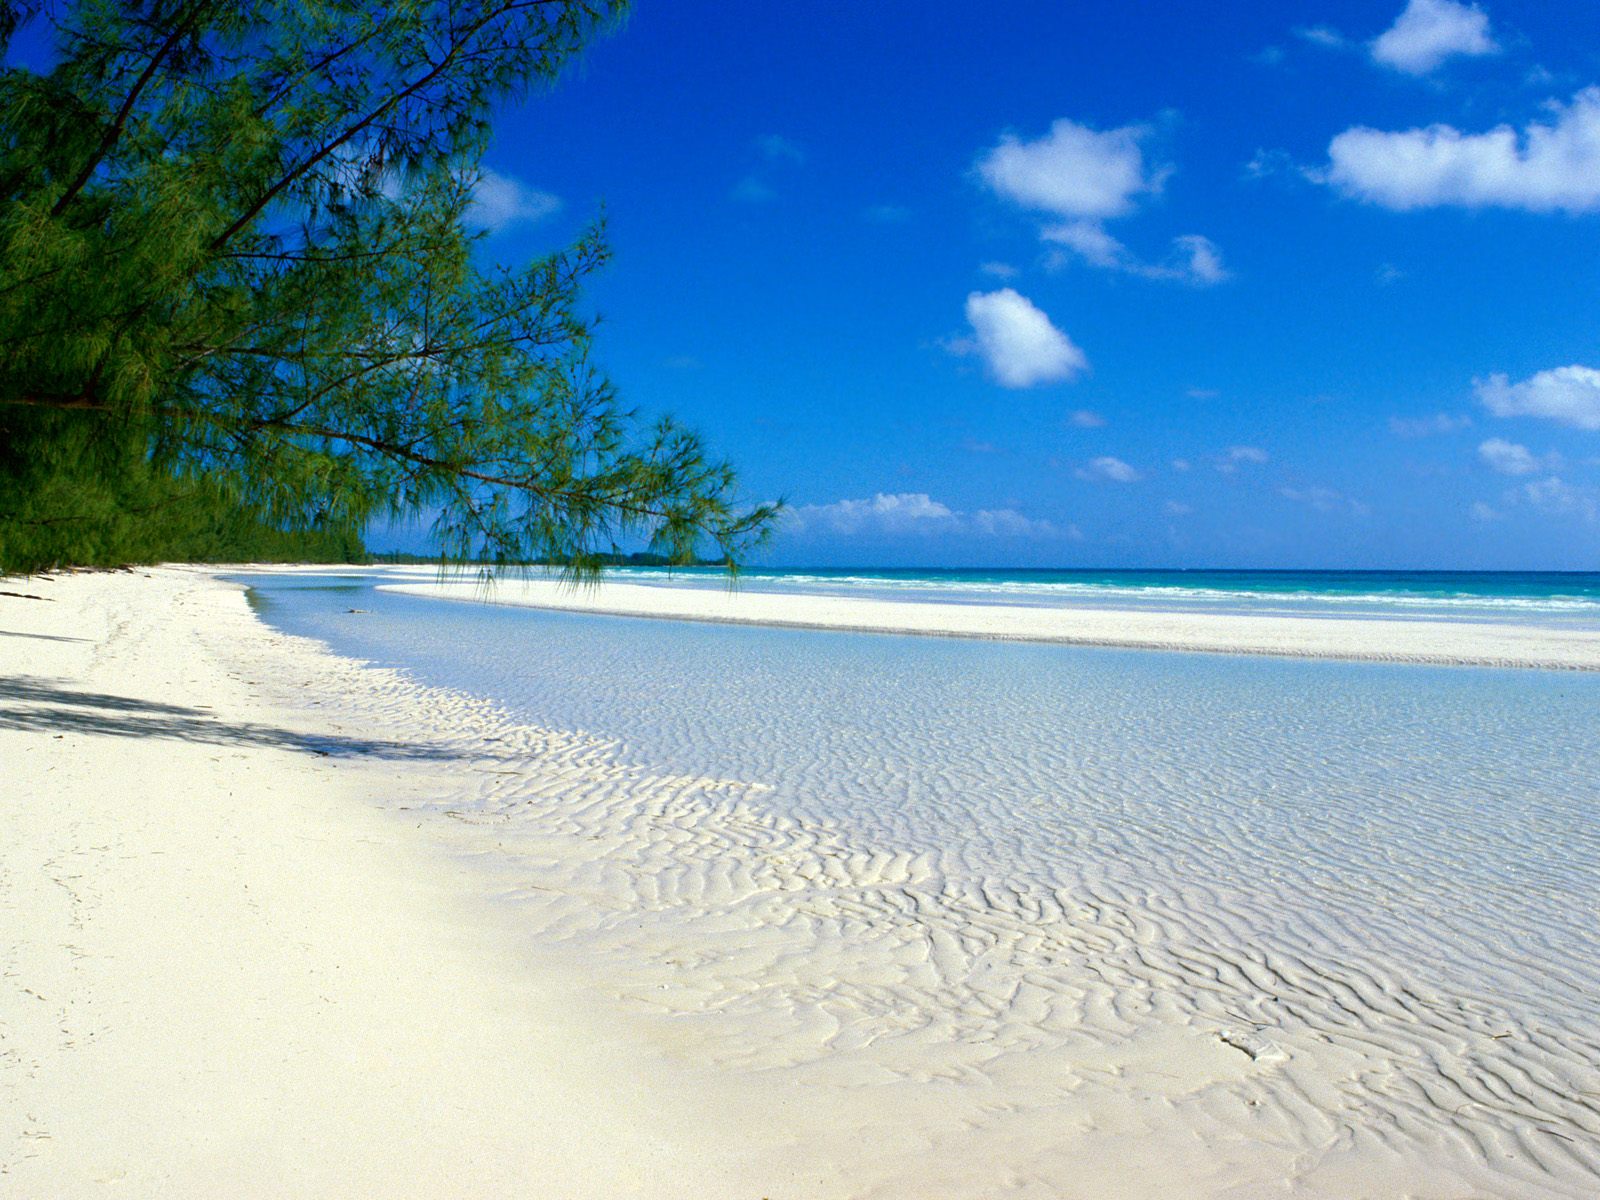 http://4.bp.blogspot.com/_ZVl3g4WfT_M/S93k9JC8gII/AAAAAAAAD1I/6QvZpQNtN7Y/s1600/bahamas+beach.jpg